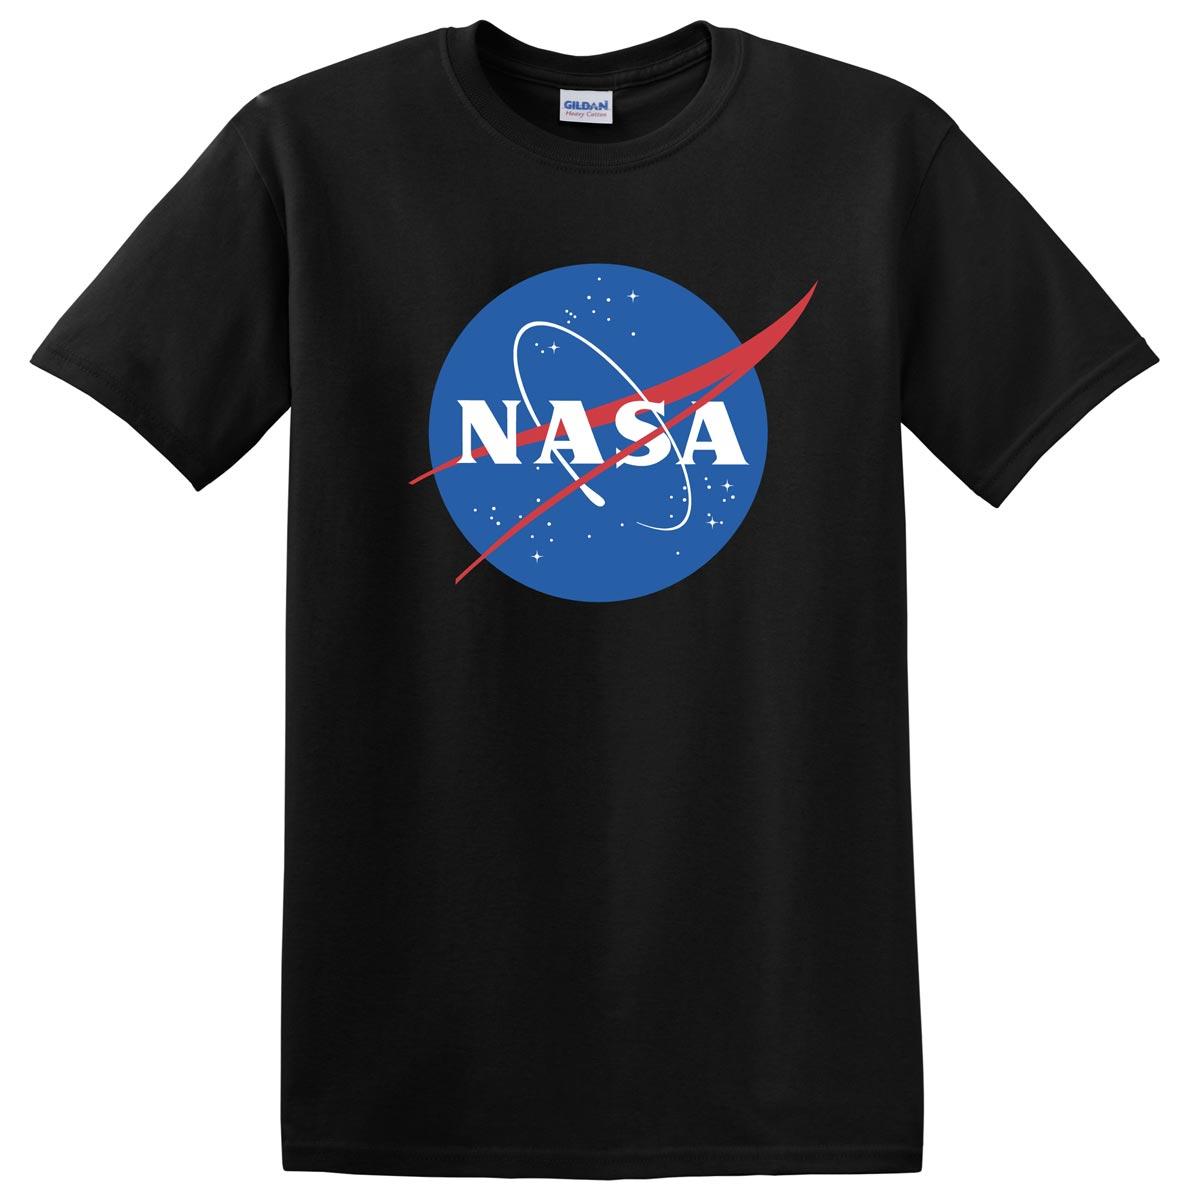 NASA Moon Logo - NASA Shirt Meatball Science Space T-shirt Tee Black Men Women Adult